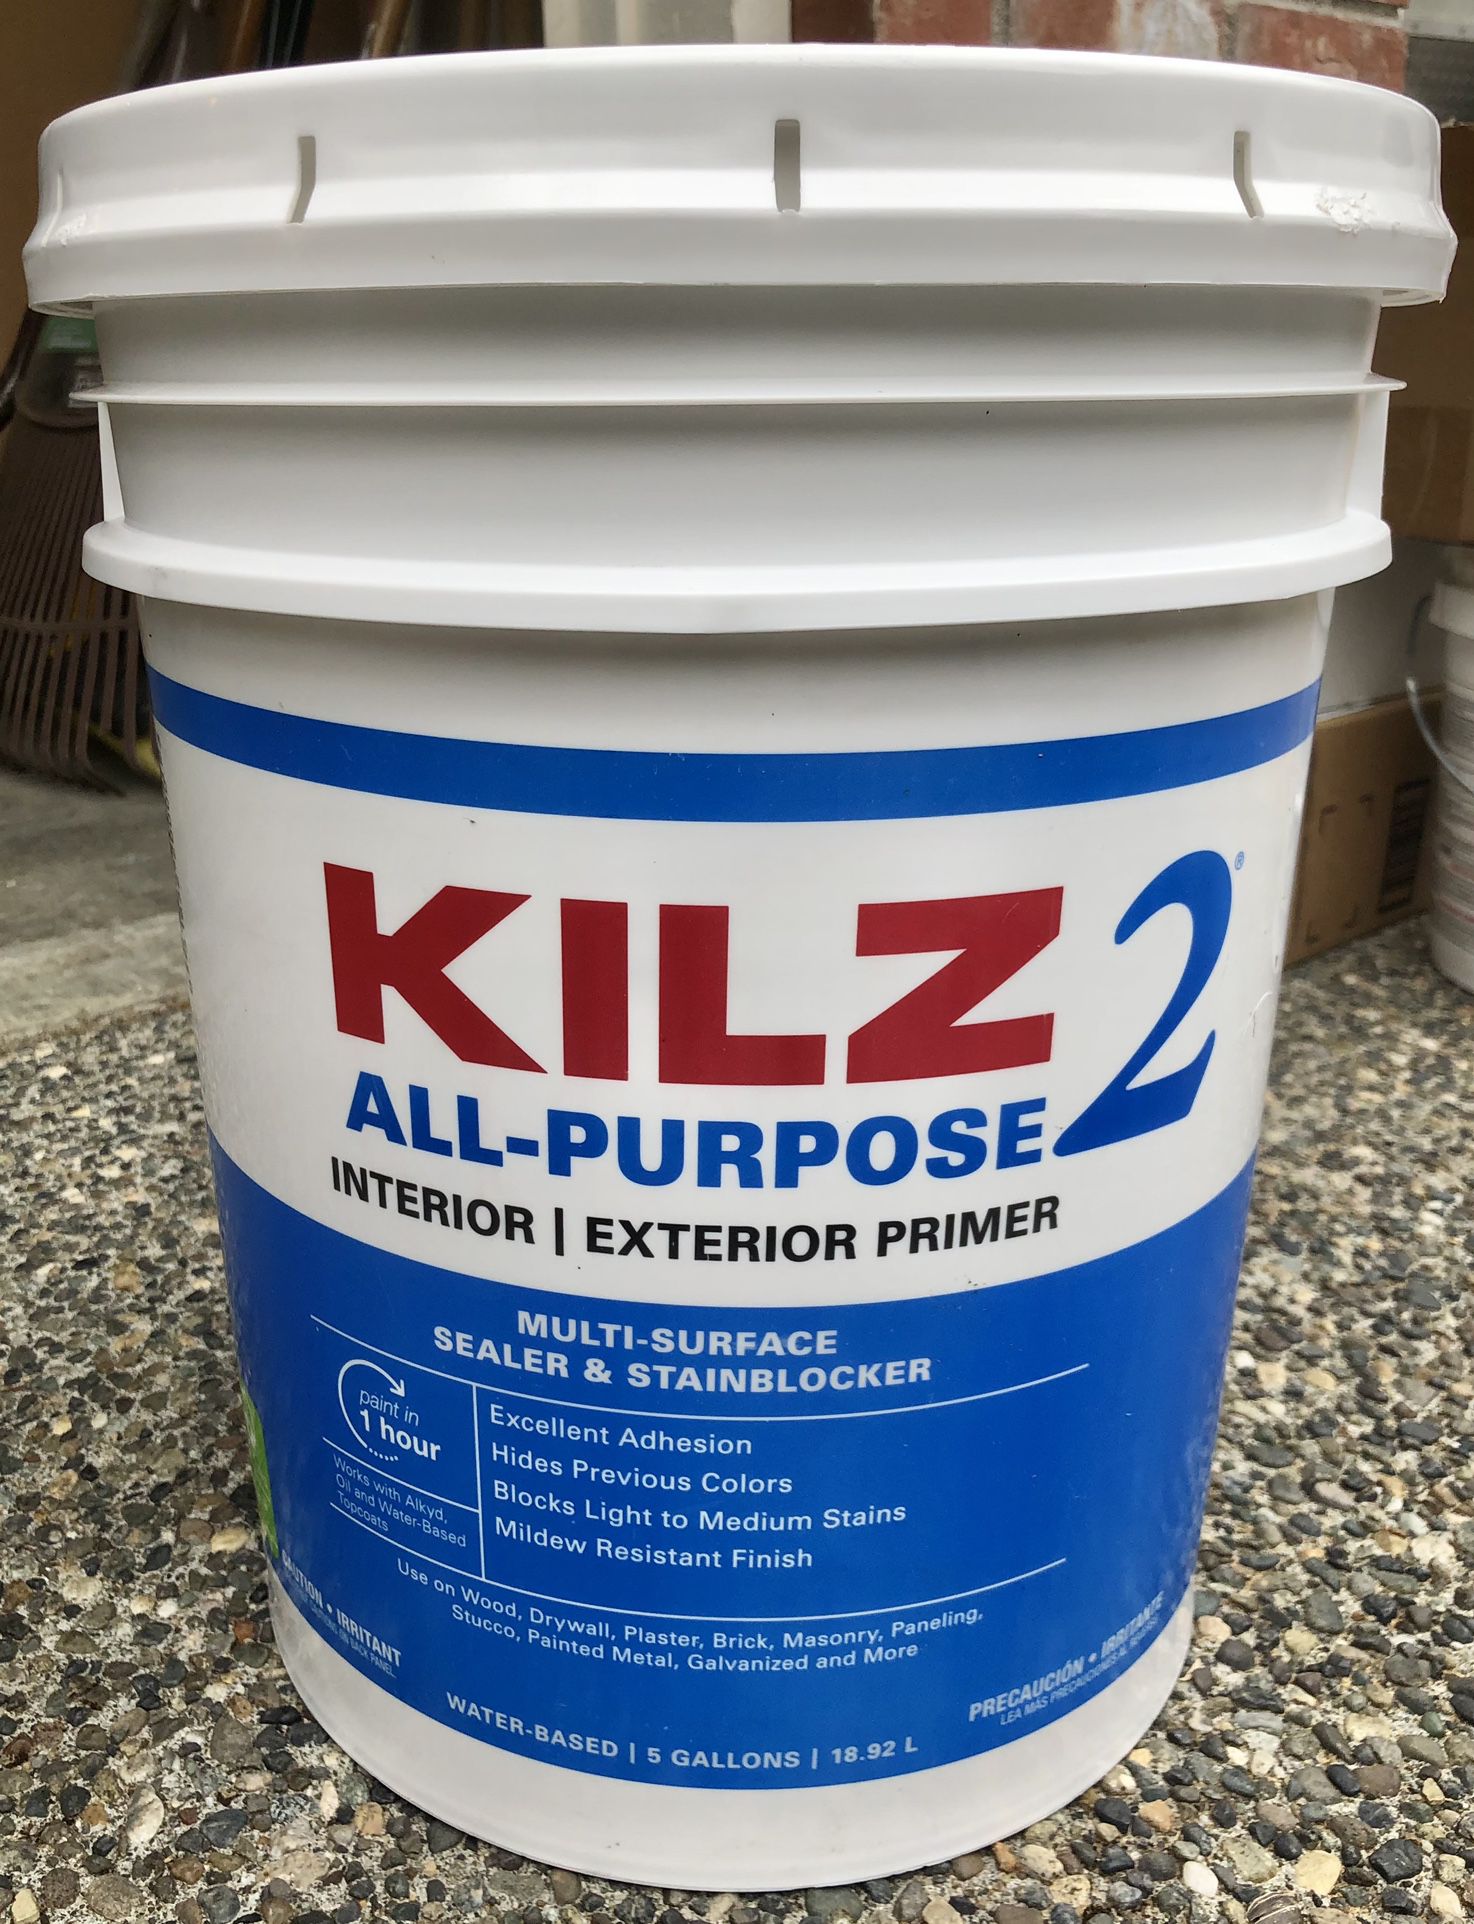 5 Gallons Of Kilz 2 Interior/exterior Primer